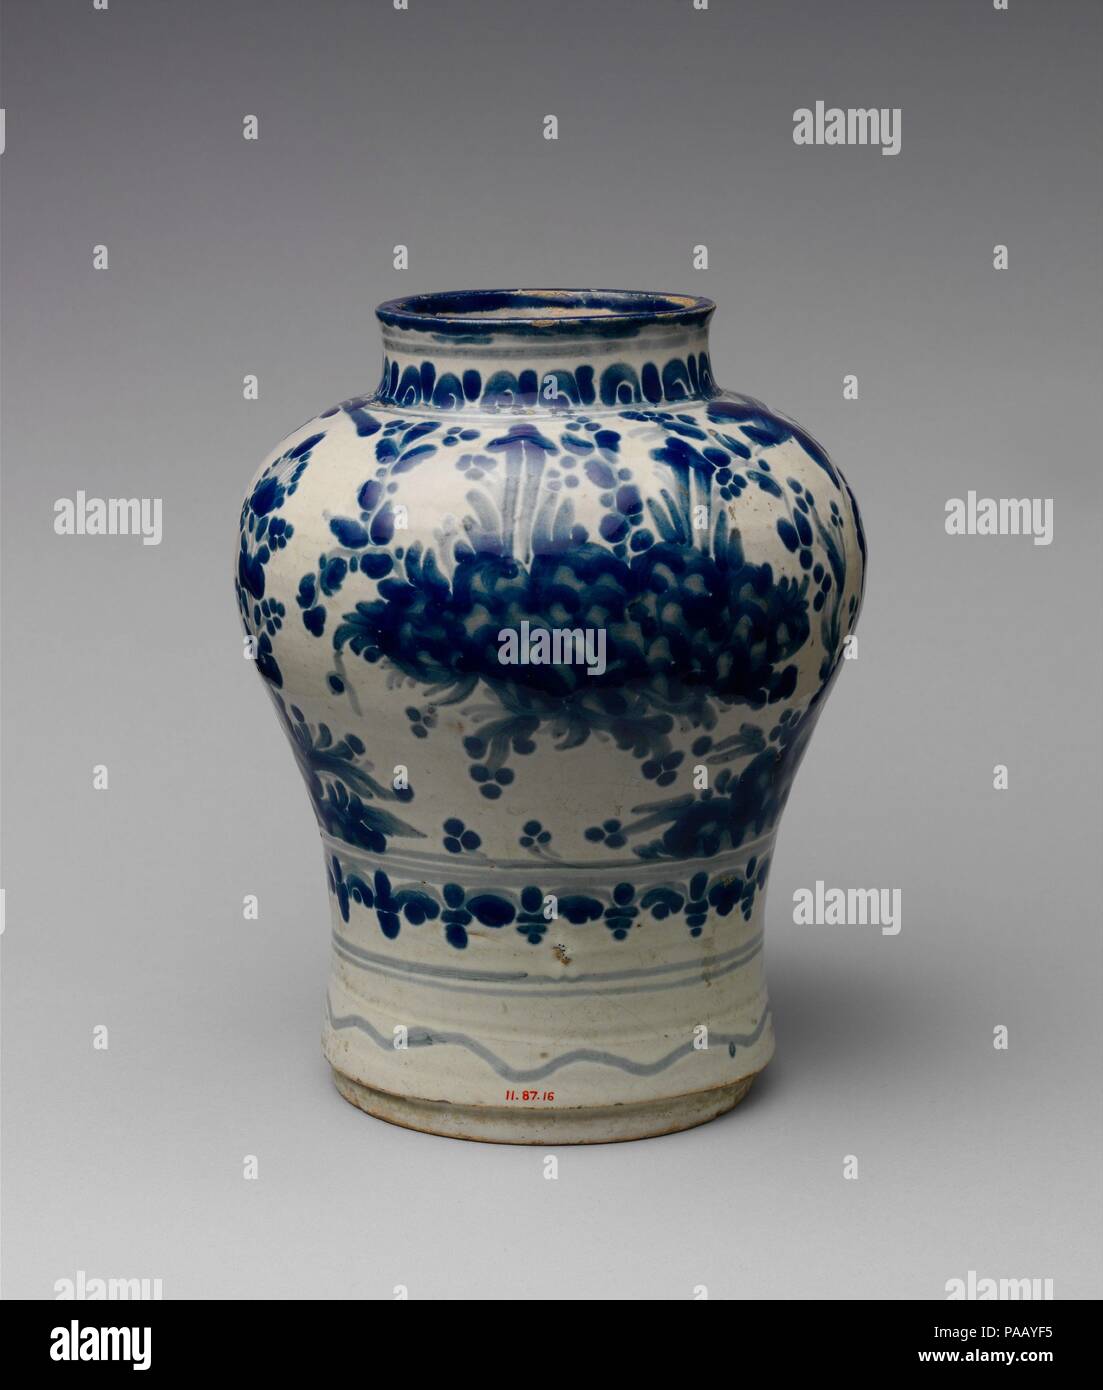 Jar. Culture: Mexican. Dimensions: H. 9 1/2 in. (24.1 cm). Date: ca. 1750-1800. Museum: Metropolitan Museum of Art, New York, USA. Stock Photo